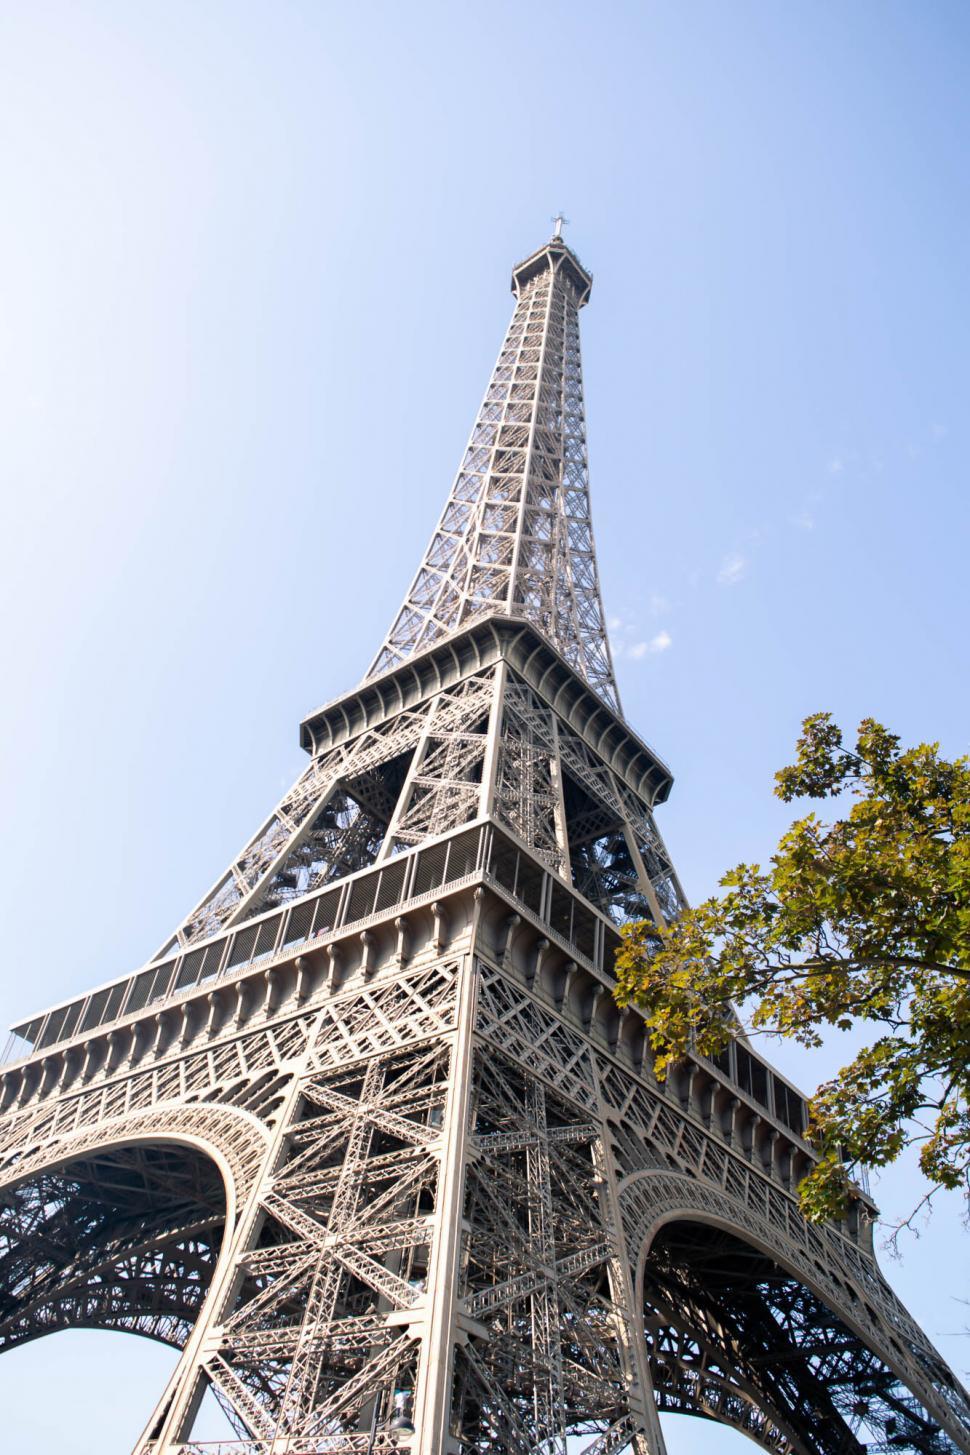 Free Image of Eiffel Tower - Paris 